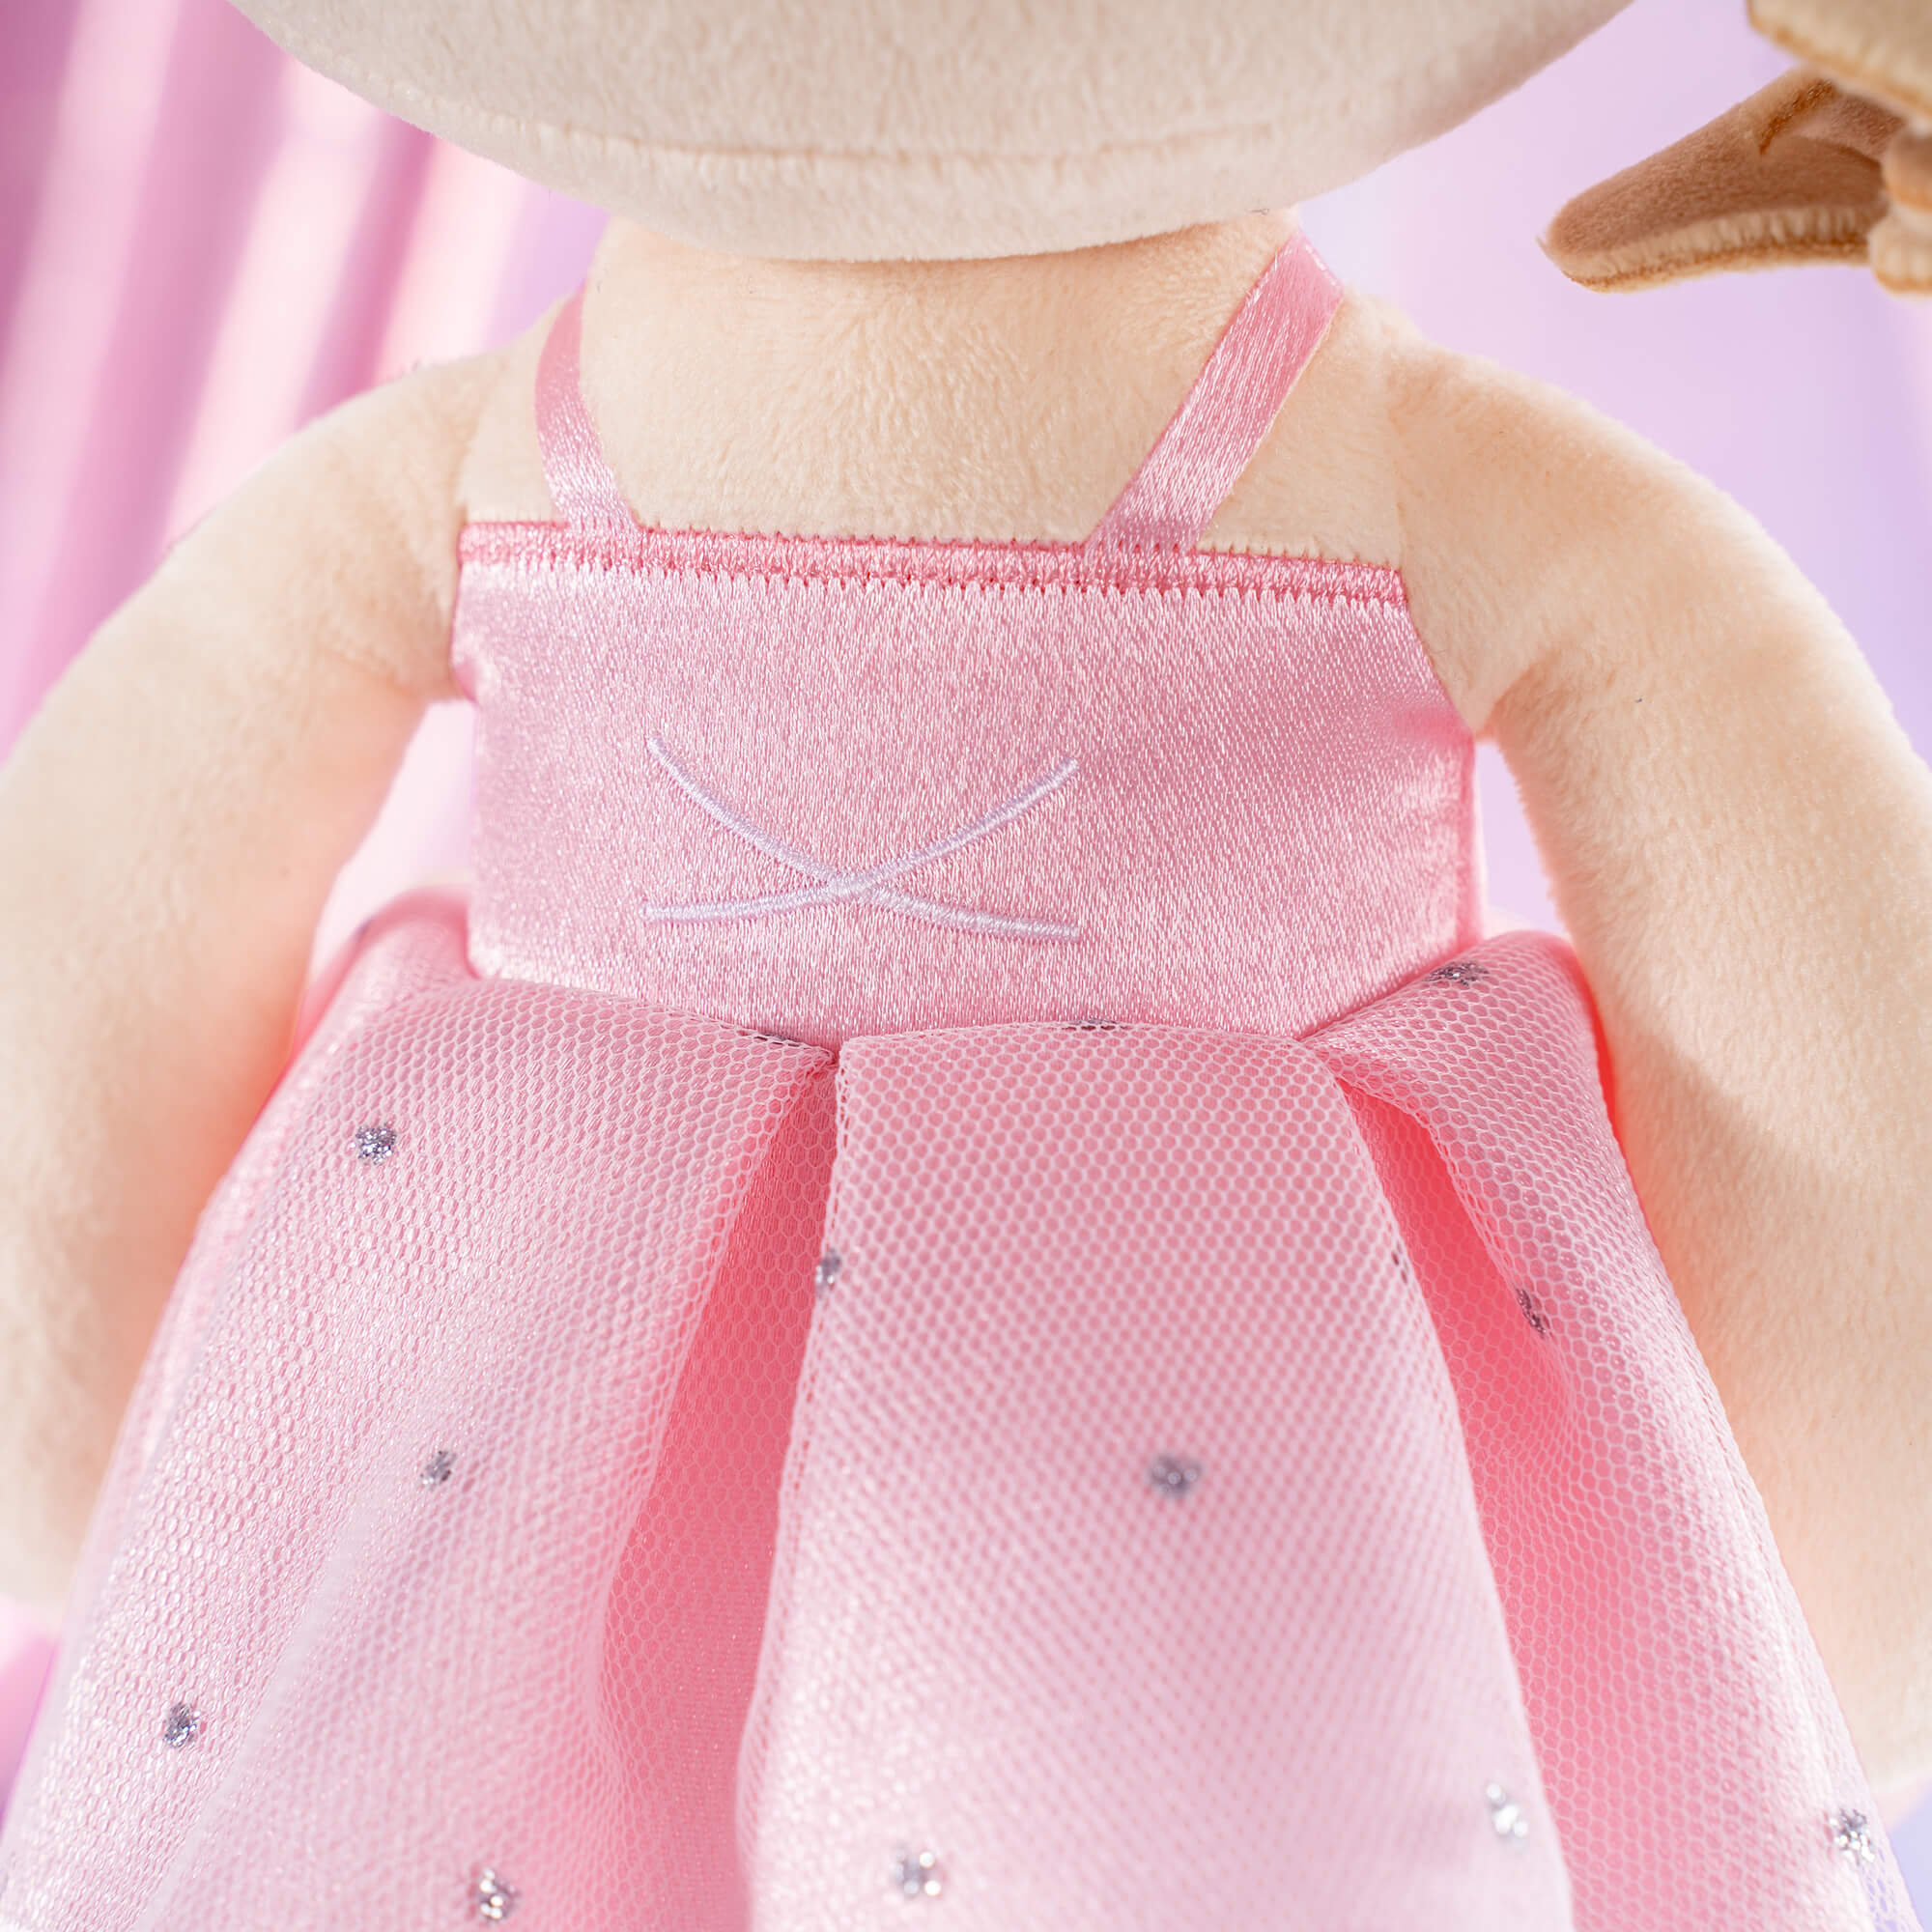 Gloveleya 9-inch Personalized Plush Curly Ballet Girl Dolls Backpack Peach Ballet Dream